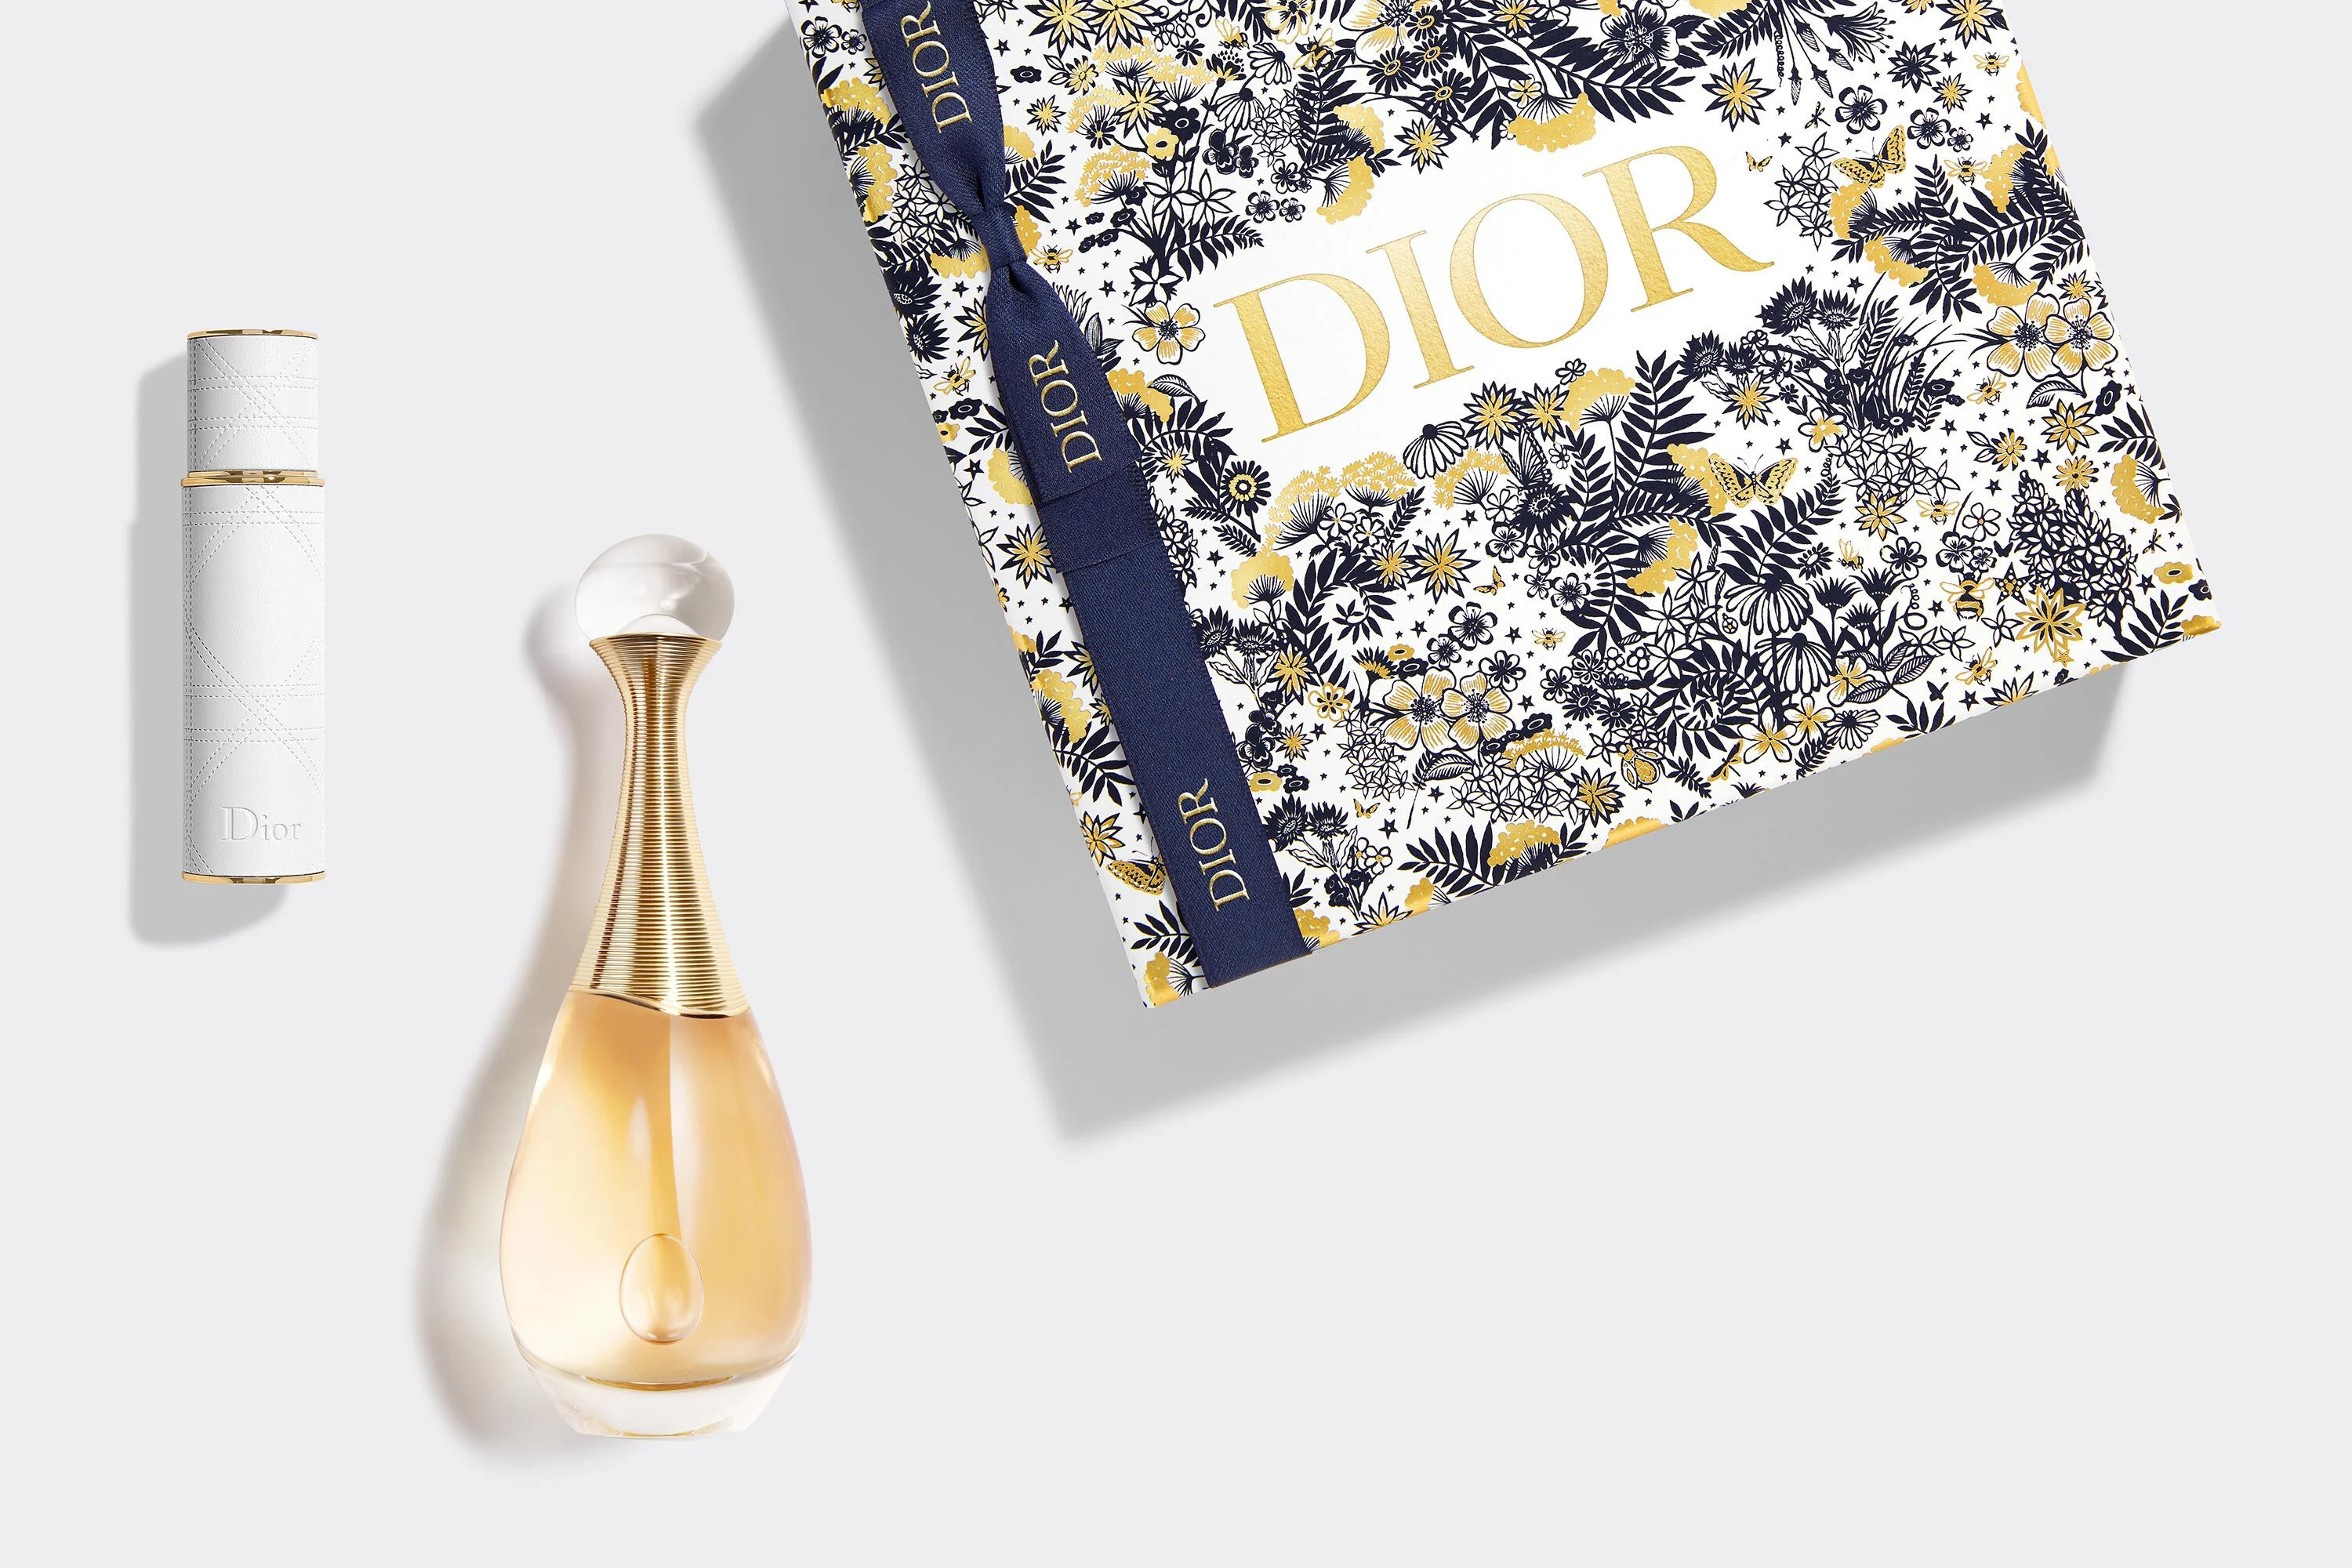 Jadore Gift Set by DIOR  Buy online  parfumdreams